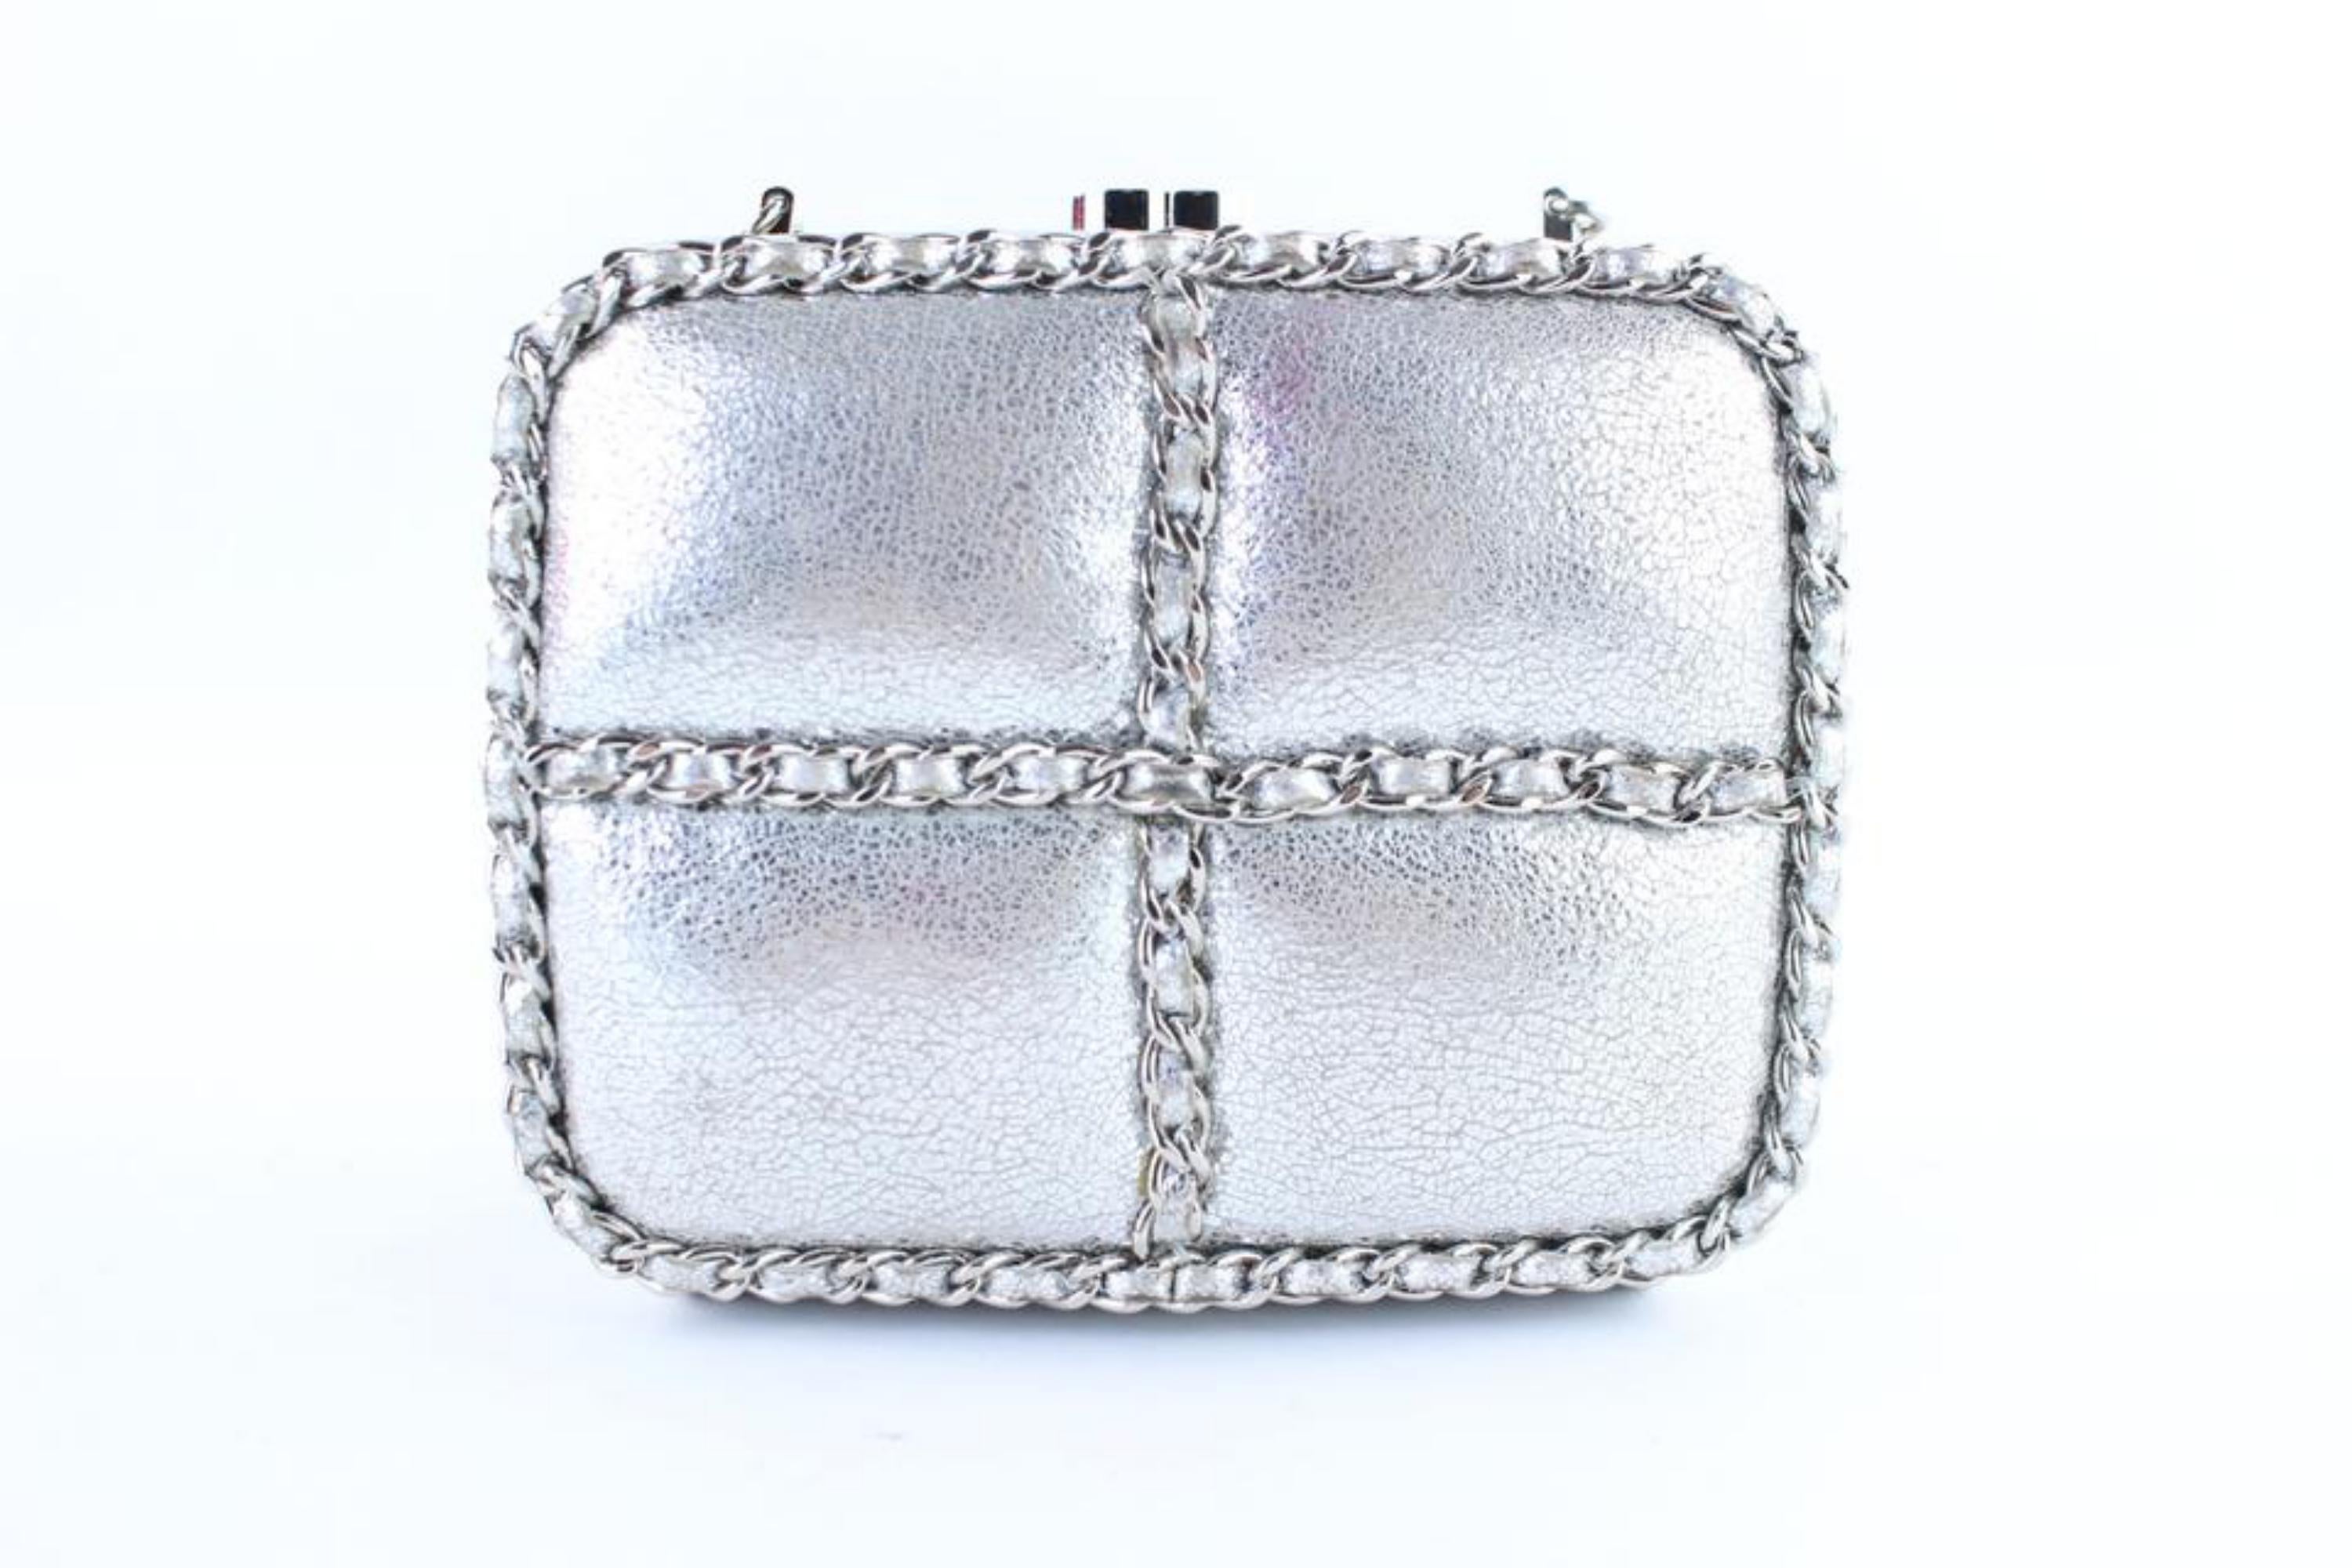 Chanel Minaudière Metallic 1cr0115 Silver Leather Cross Body Bag For Sale 5